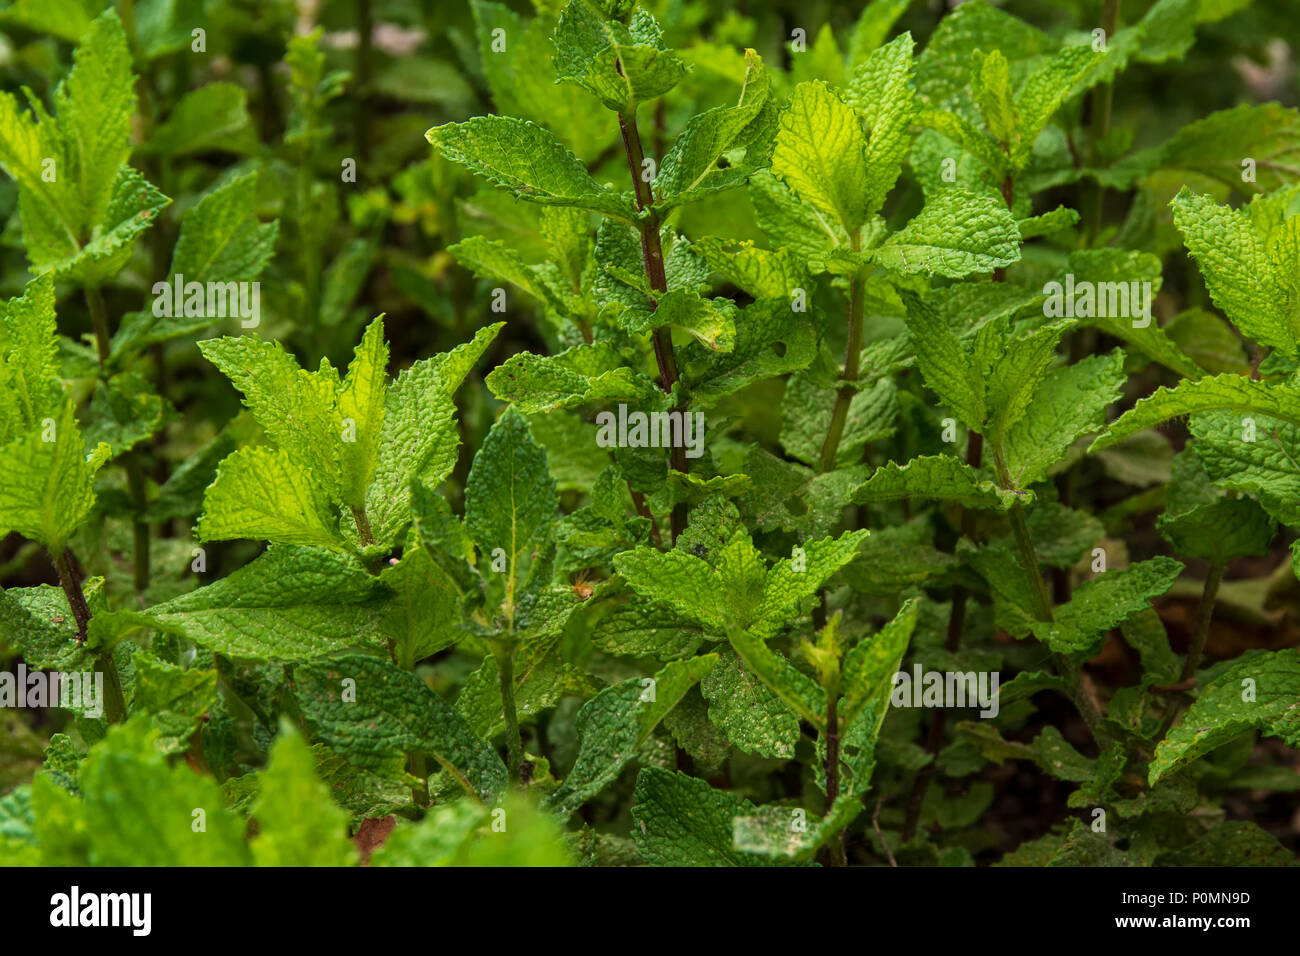 Mint plant , comun name Mint, scientific name Mentha Spicata L. Stock Photo